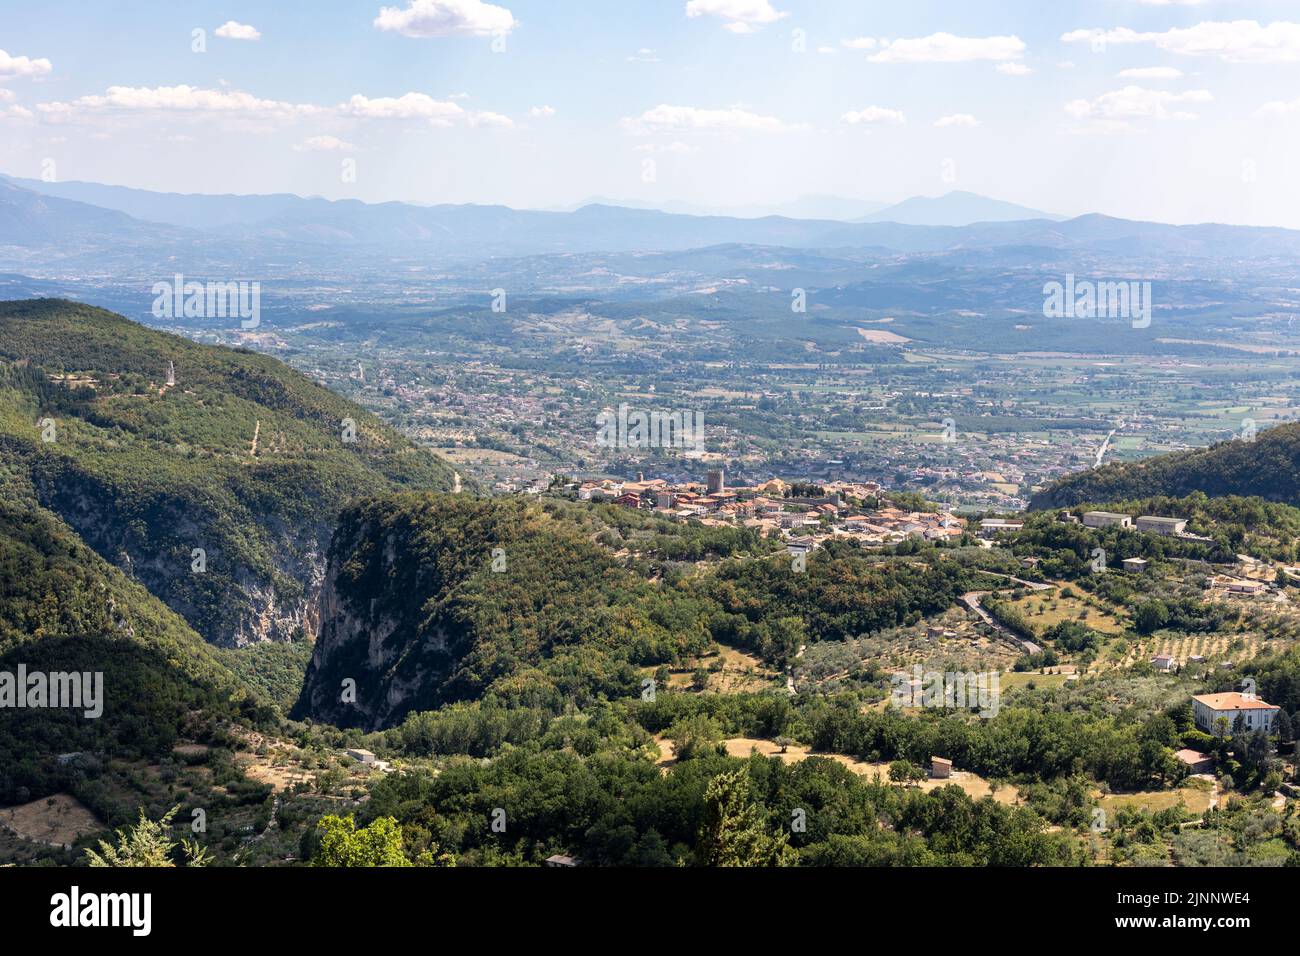 San Marco-campitello  province of Caserta Italy landascape matese, mountain, aerial view. Stock Photo